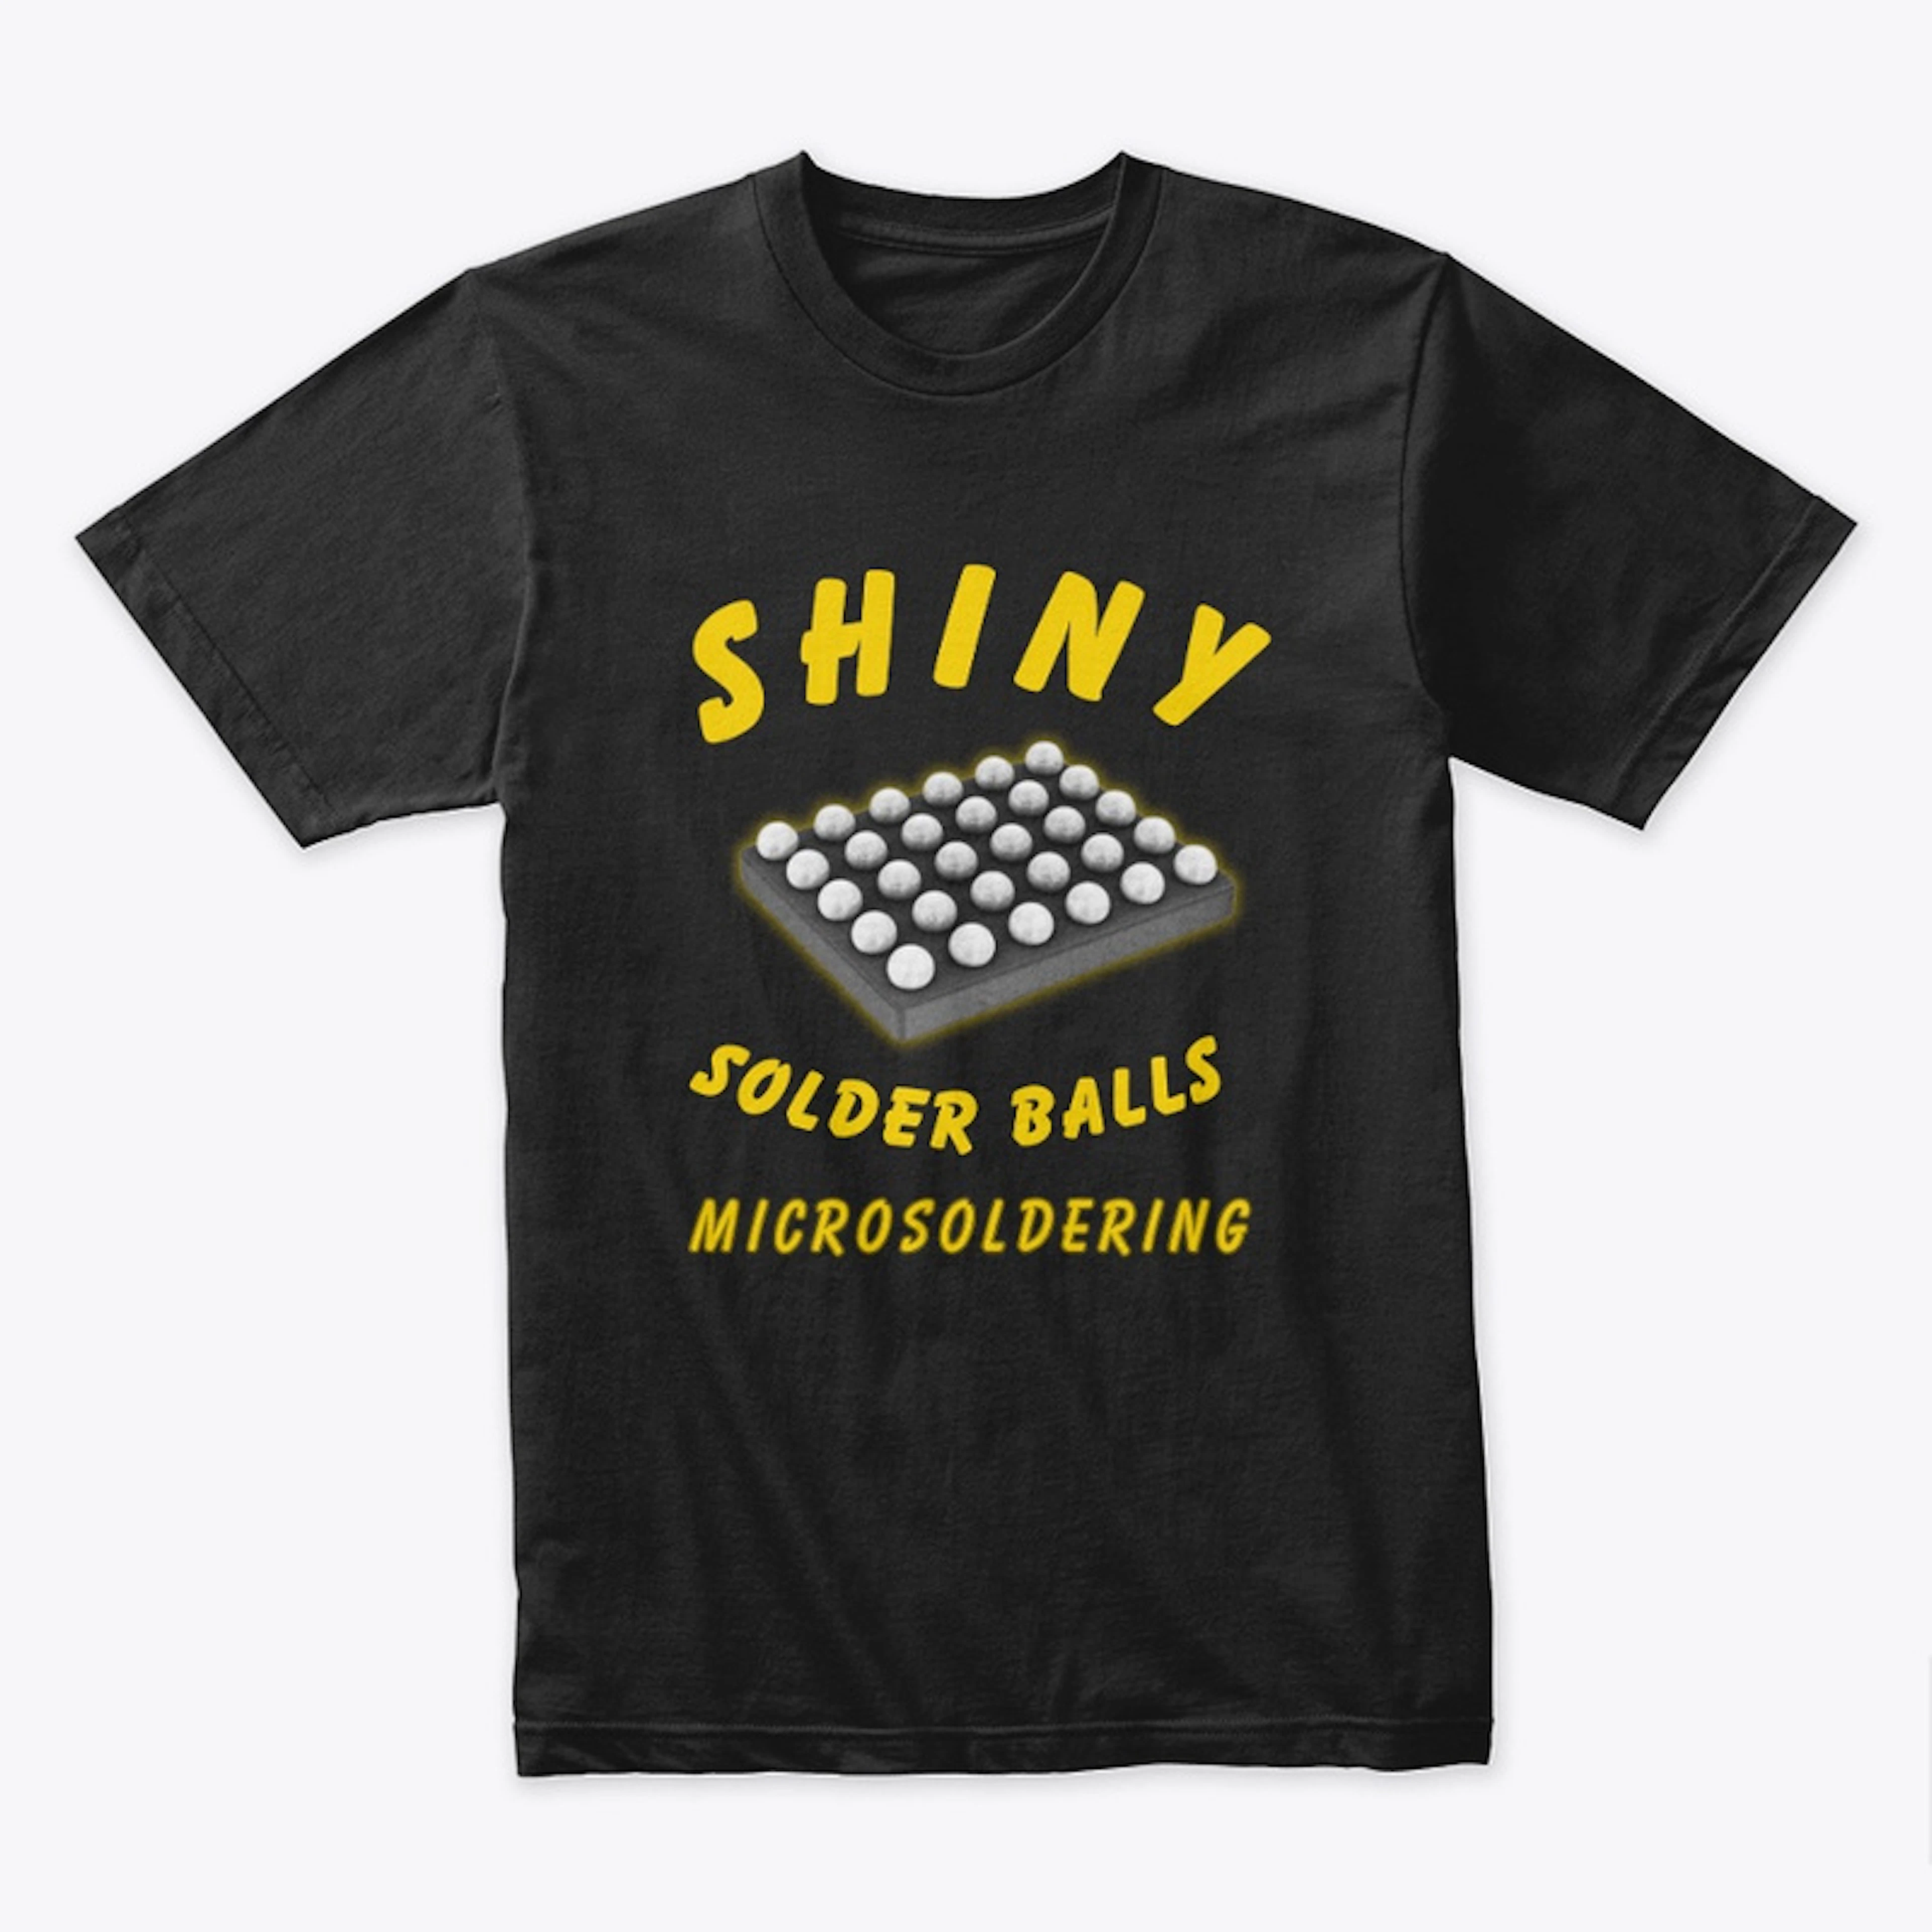 Shiny Solder Balls Microsoldering